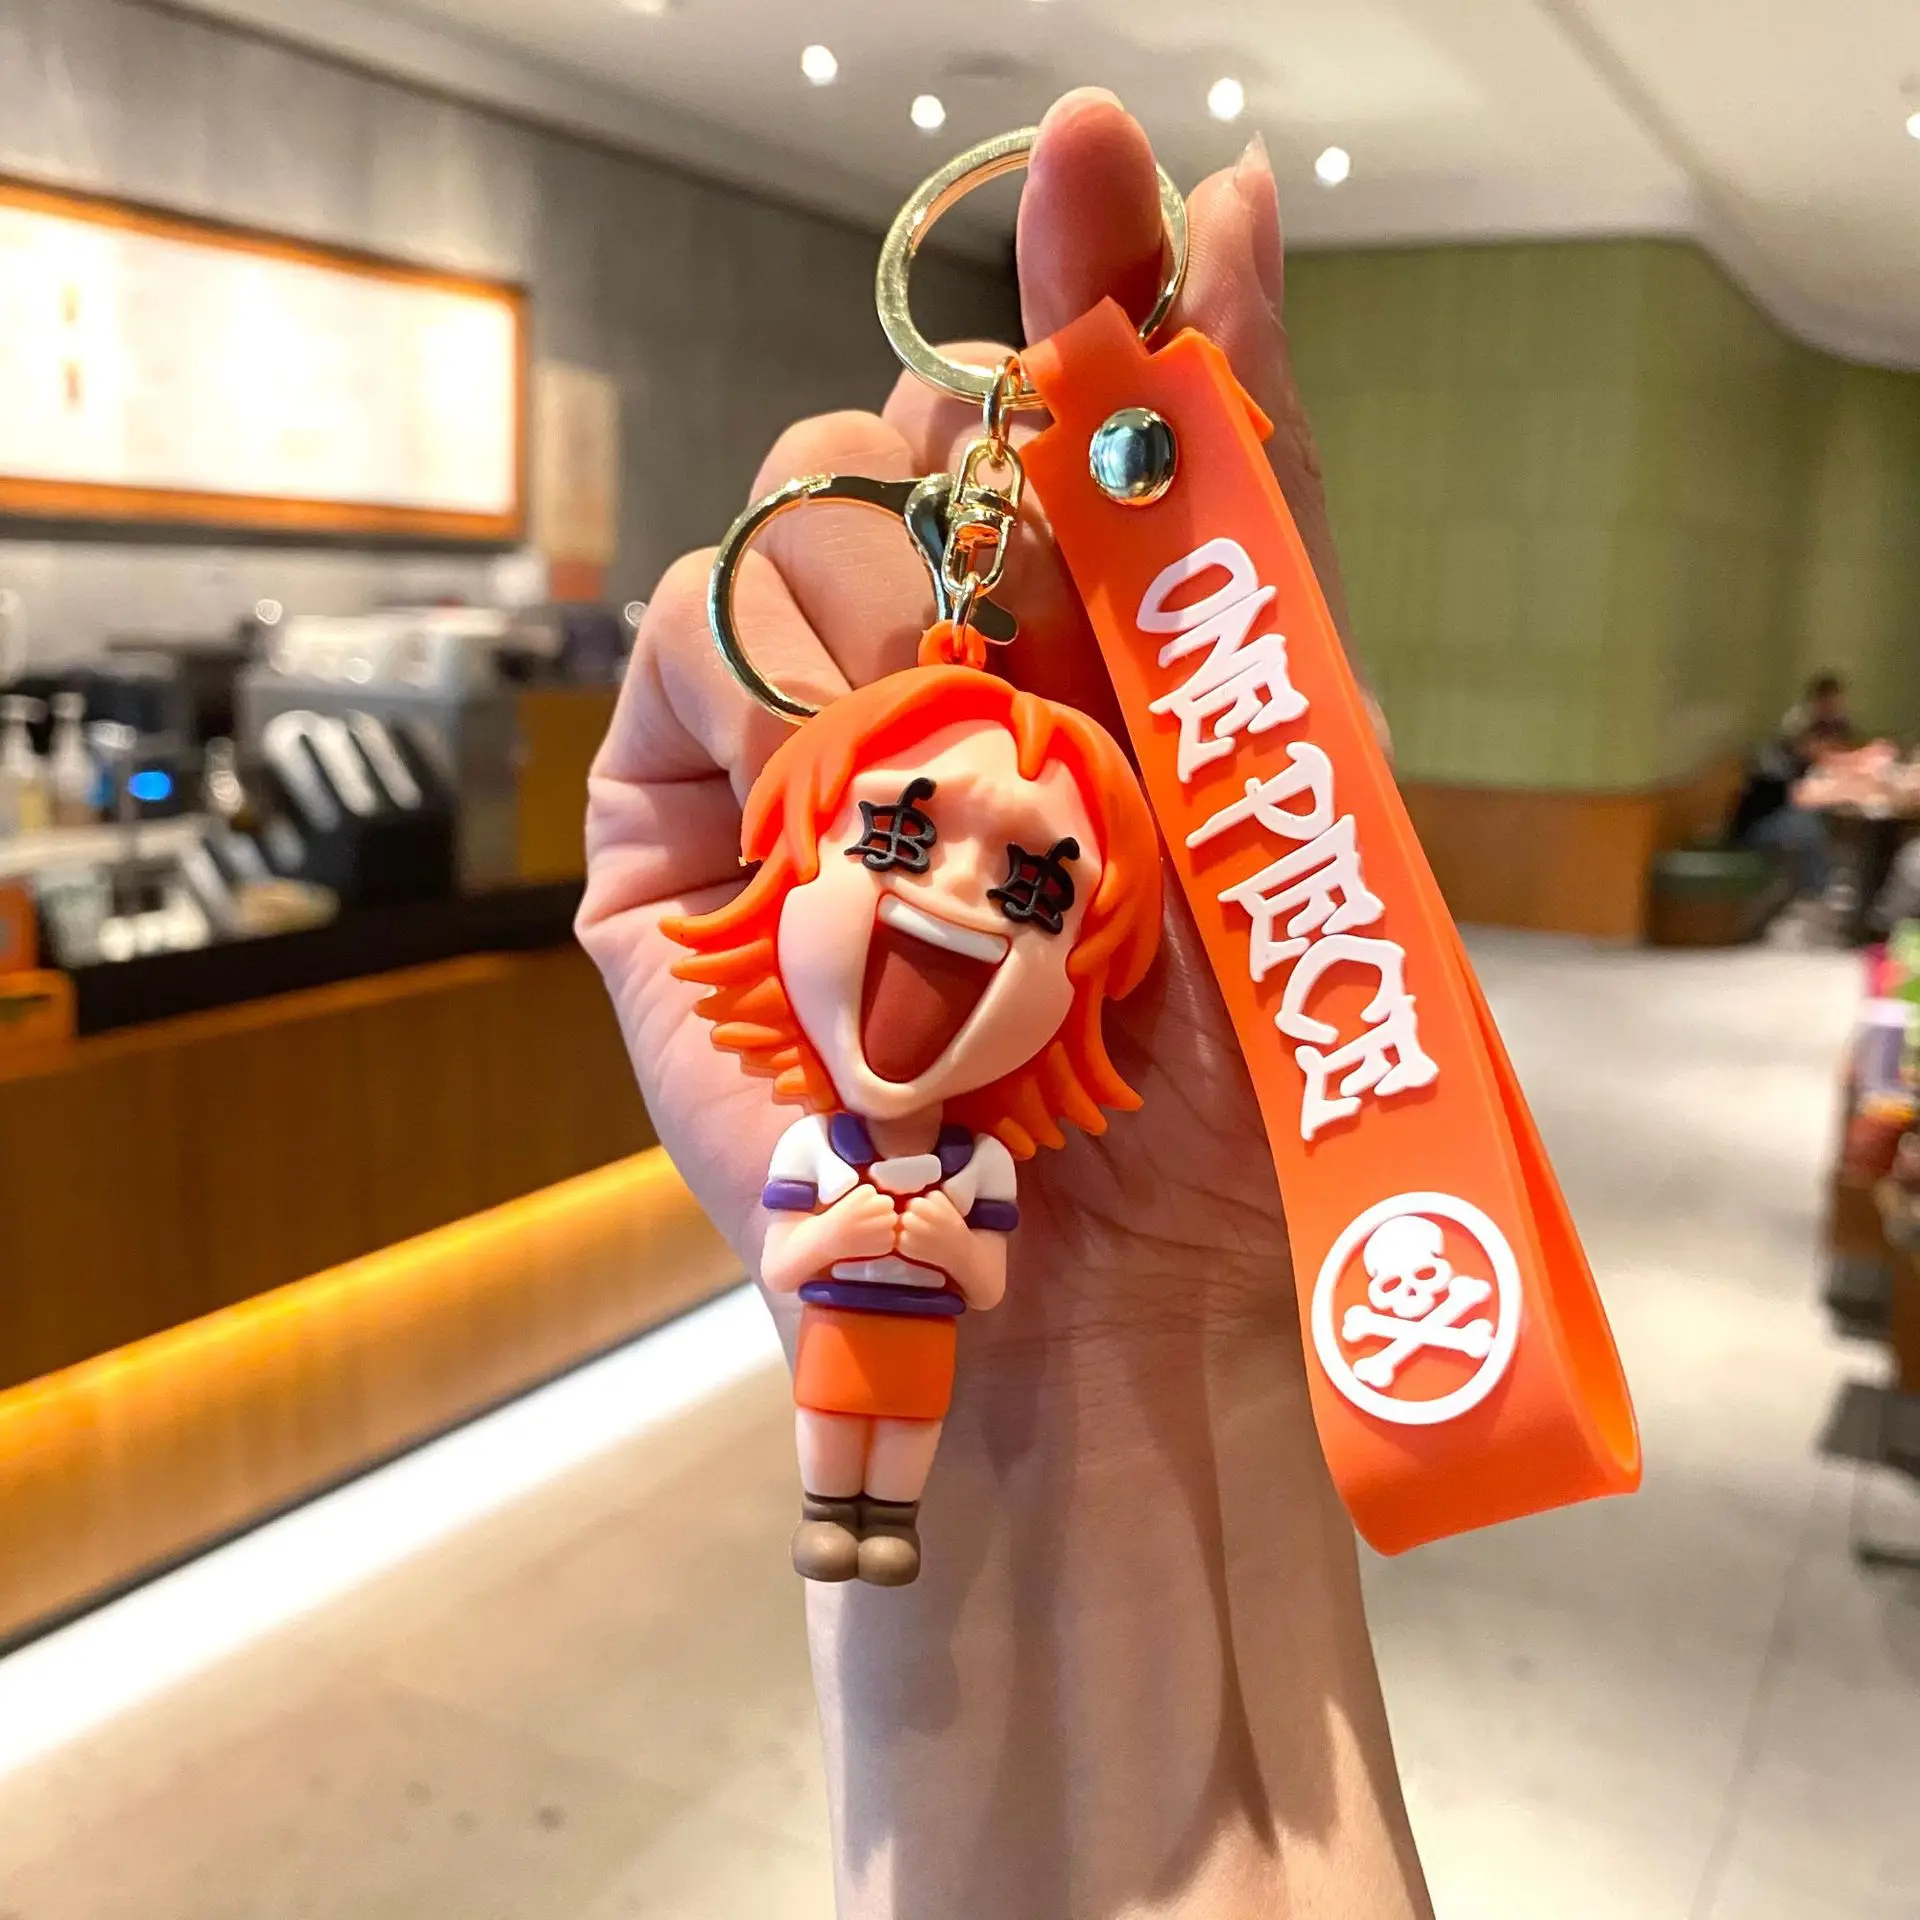 One Piece Air Pirate Luffy Keychain Cartoon Anime Figures Chopper Zoro Usopp Dolls PVC Keychain Bag Pendant Accessories Gifts